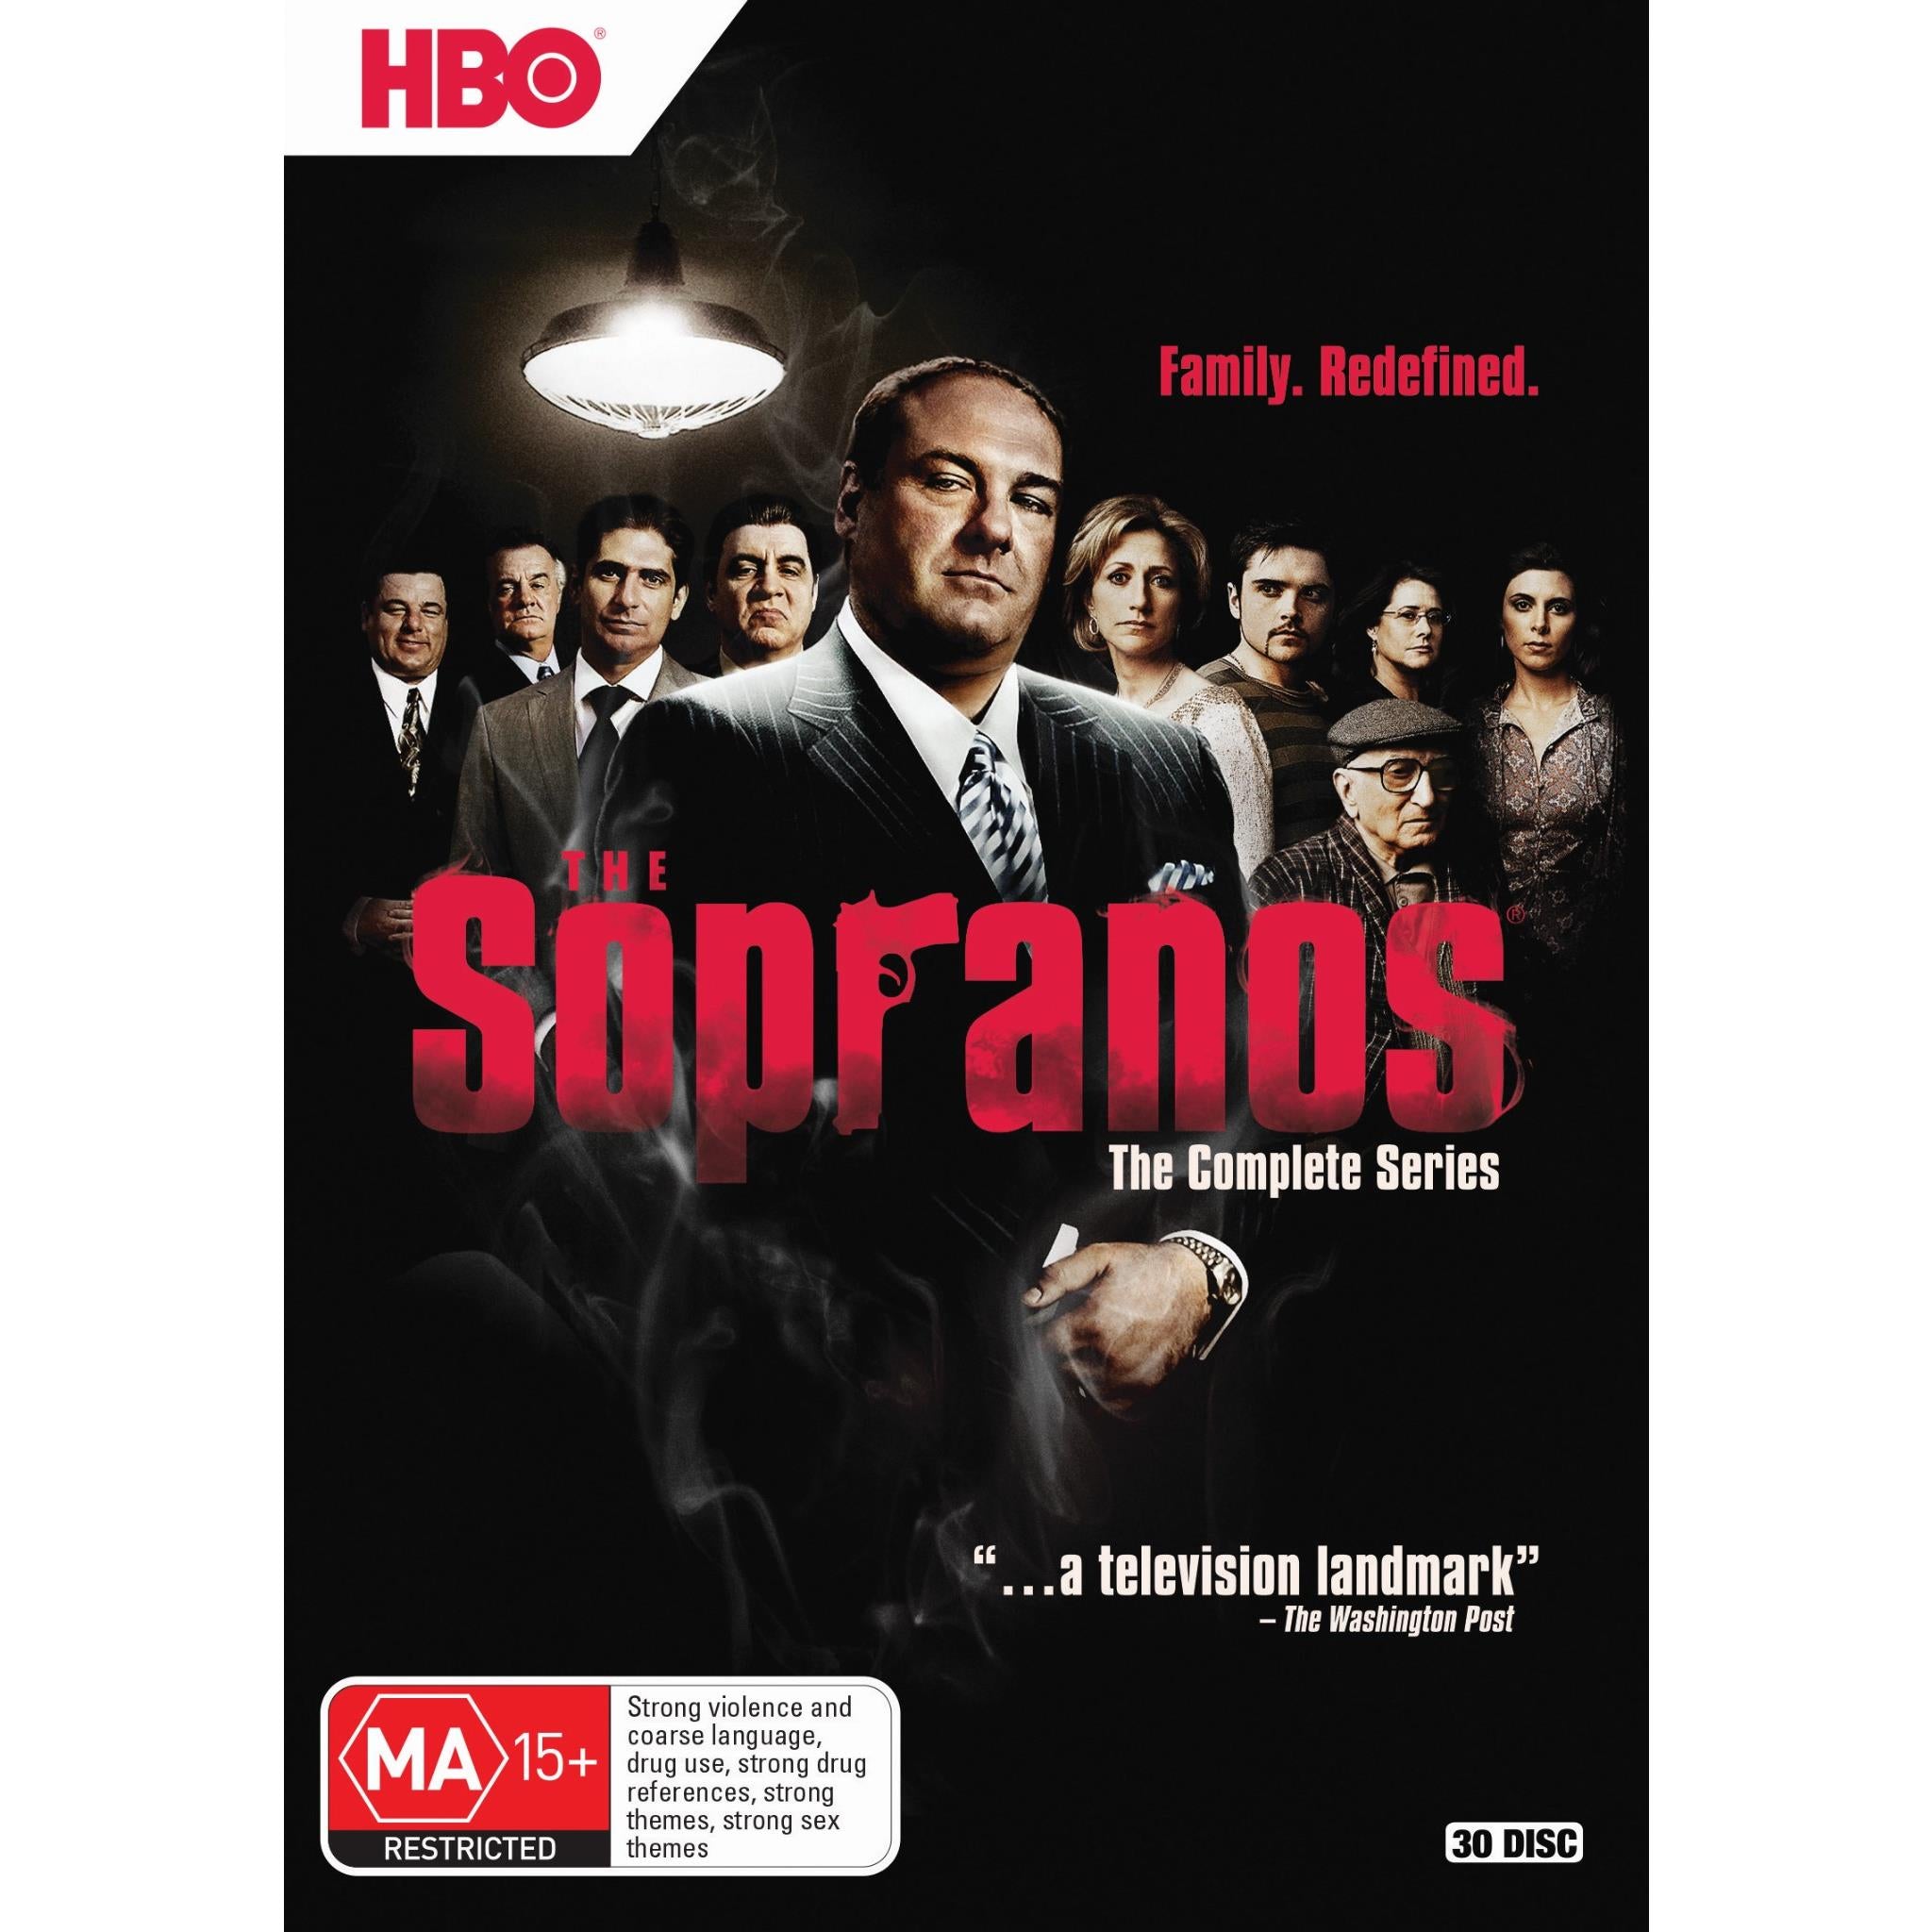 Sopranos, The - Complete Series - JB Hi-Fi